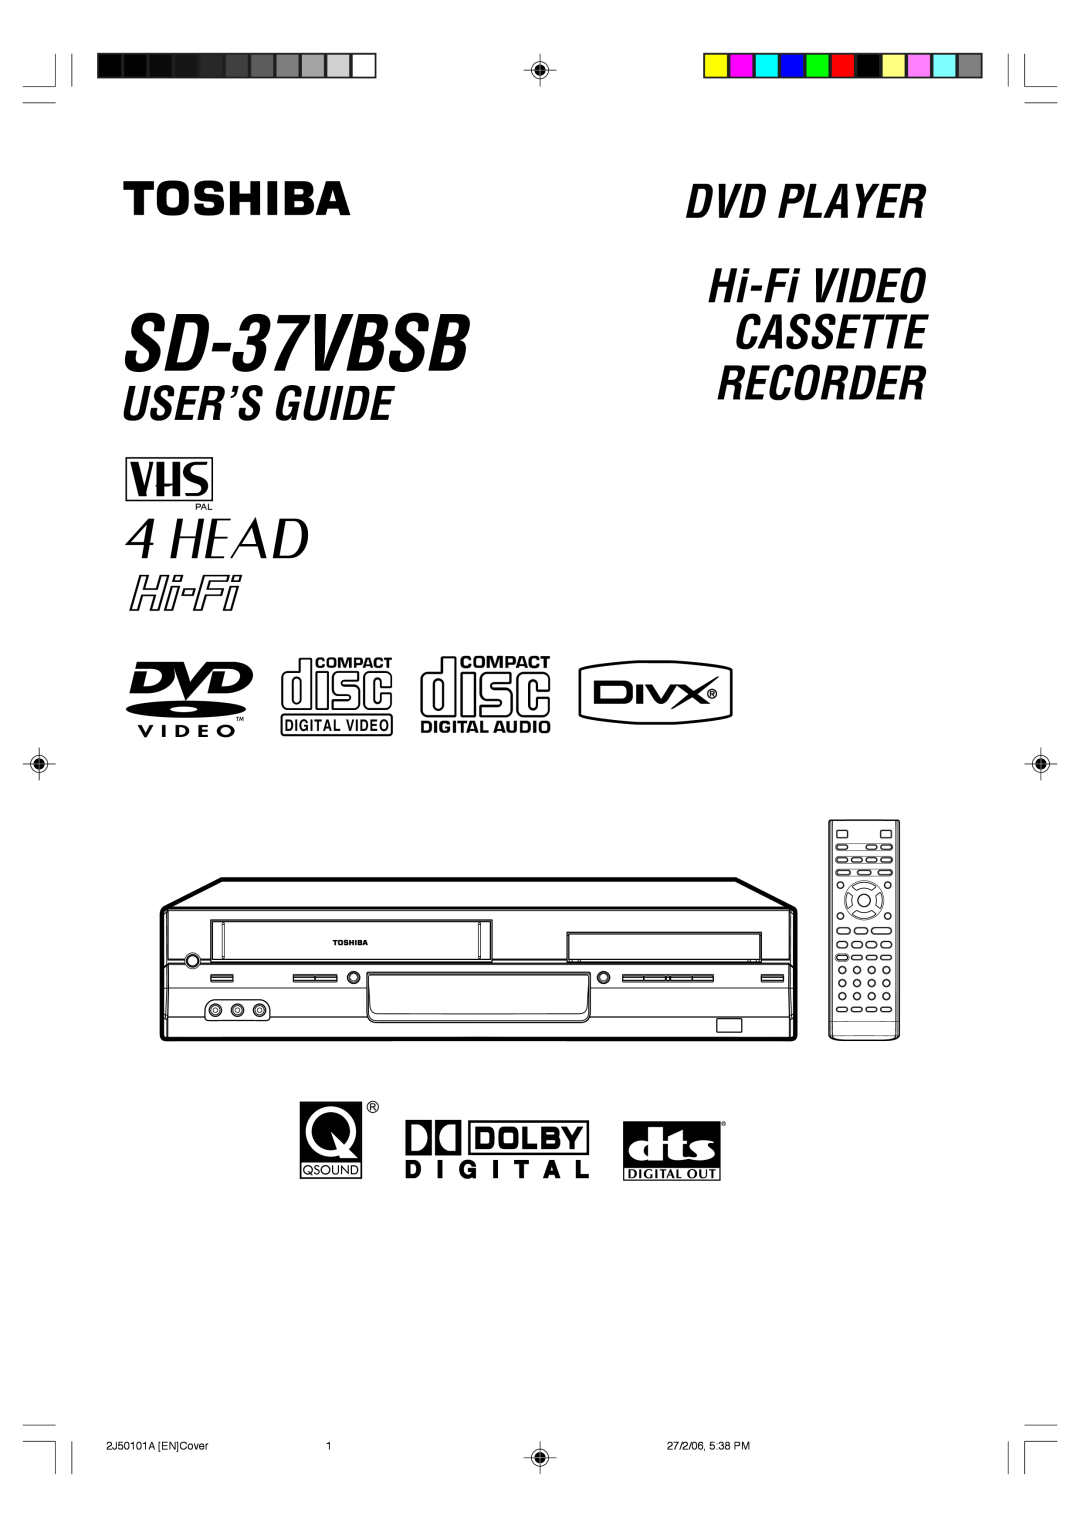 Toshiba SD-37VBSB manual DVD PLAYER Hi-Fi VIDEO, User’S Guide, Cassette, Recorder, Digital Video 